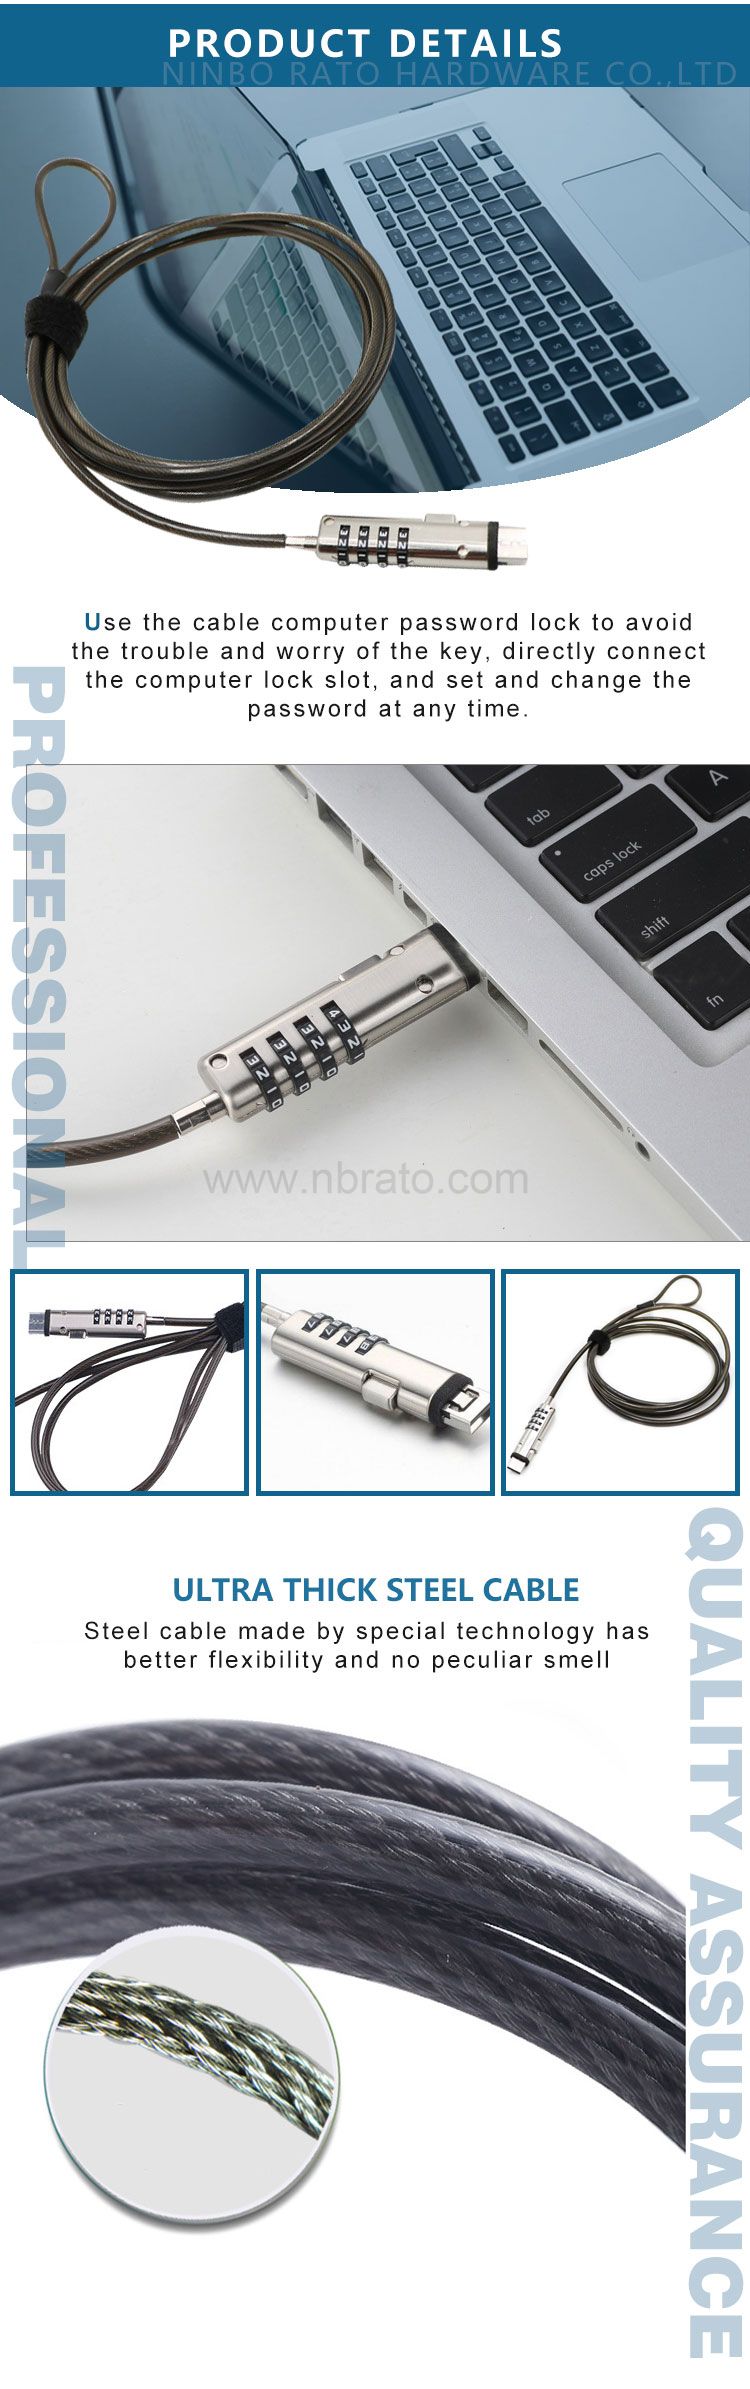 Cable computer USB Anti-theft 4 password Combination Laptop Lock